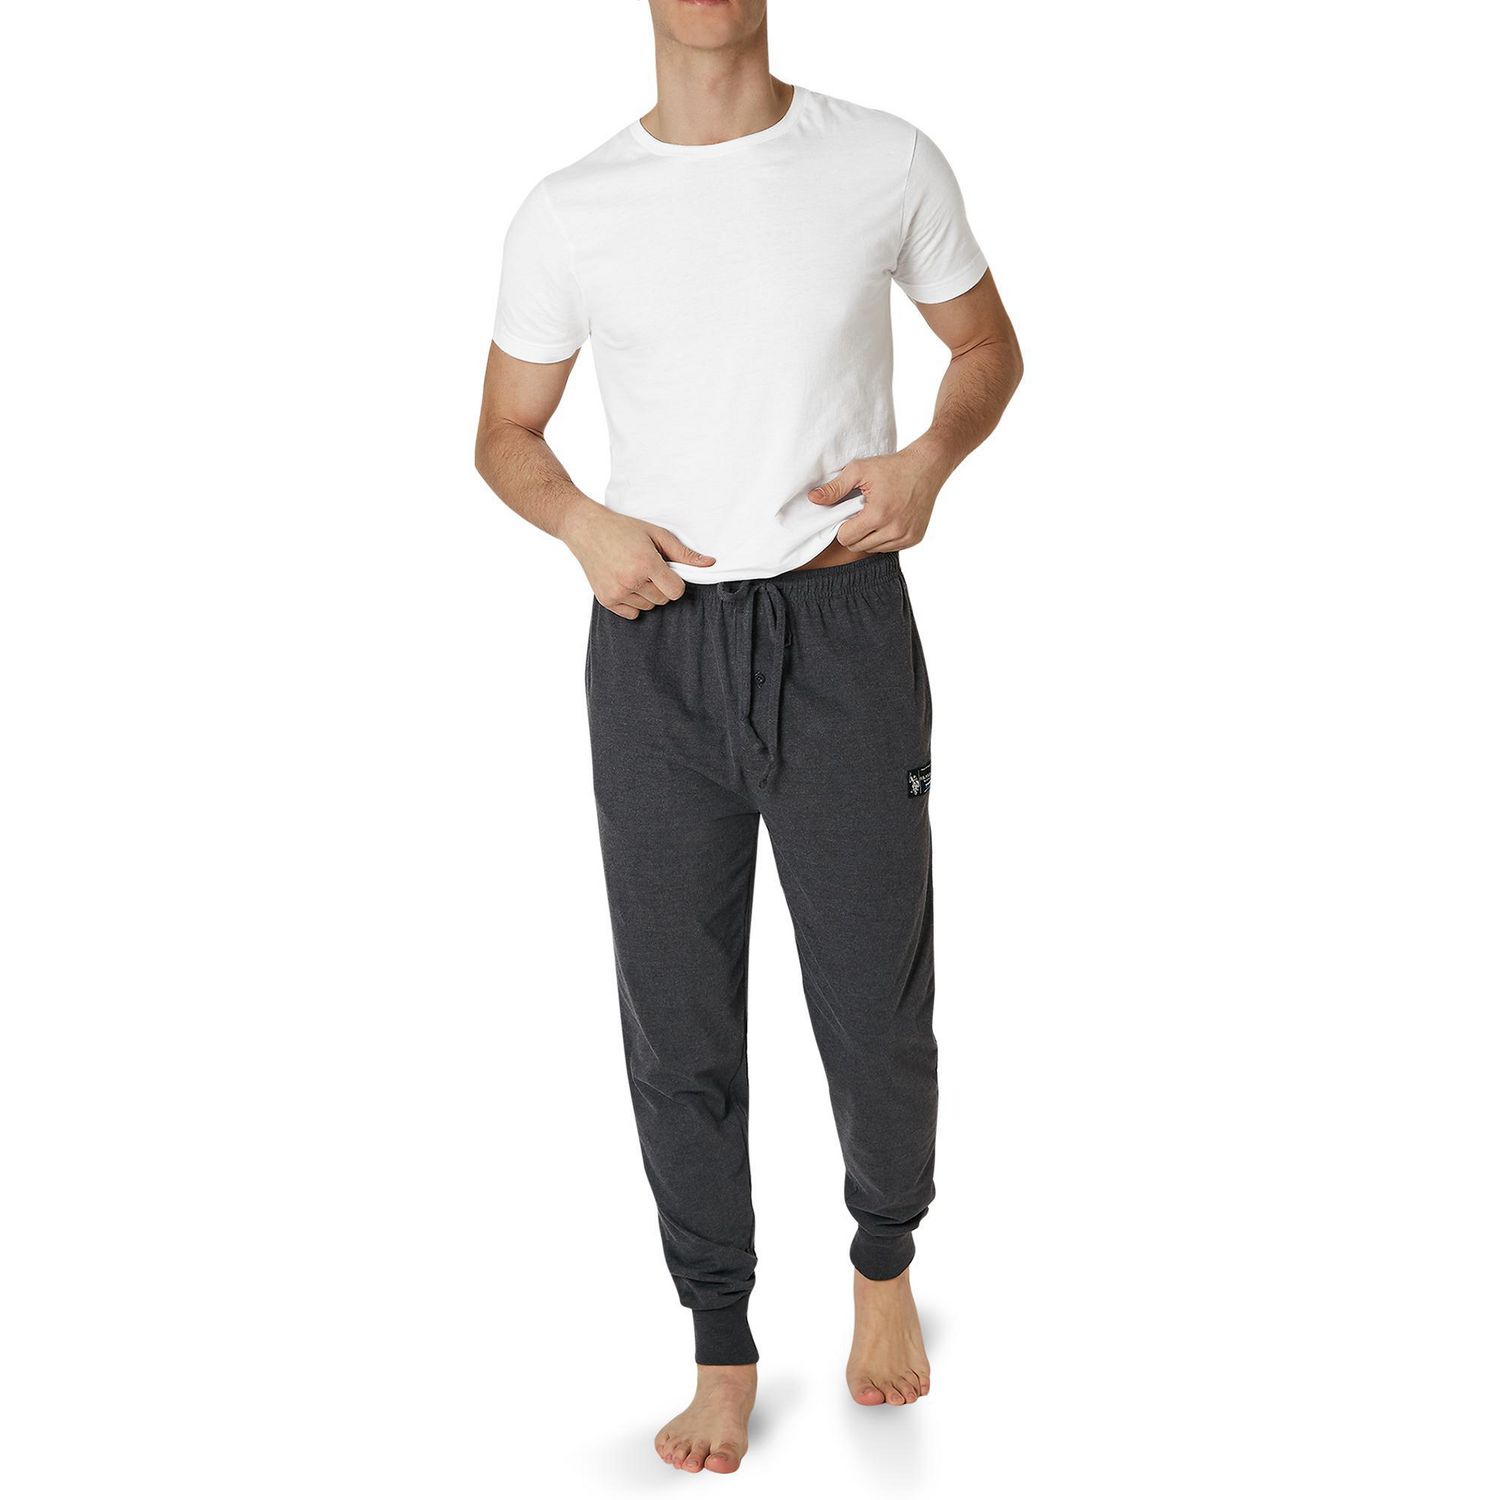 U.S. POLO ASSN. Men's Sleepwear Sueded Jogger Pant | Walmart Canada